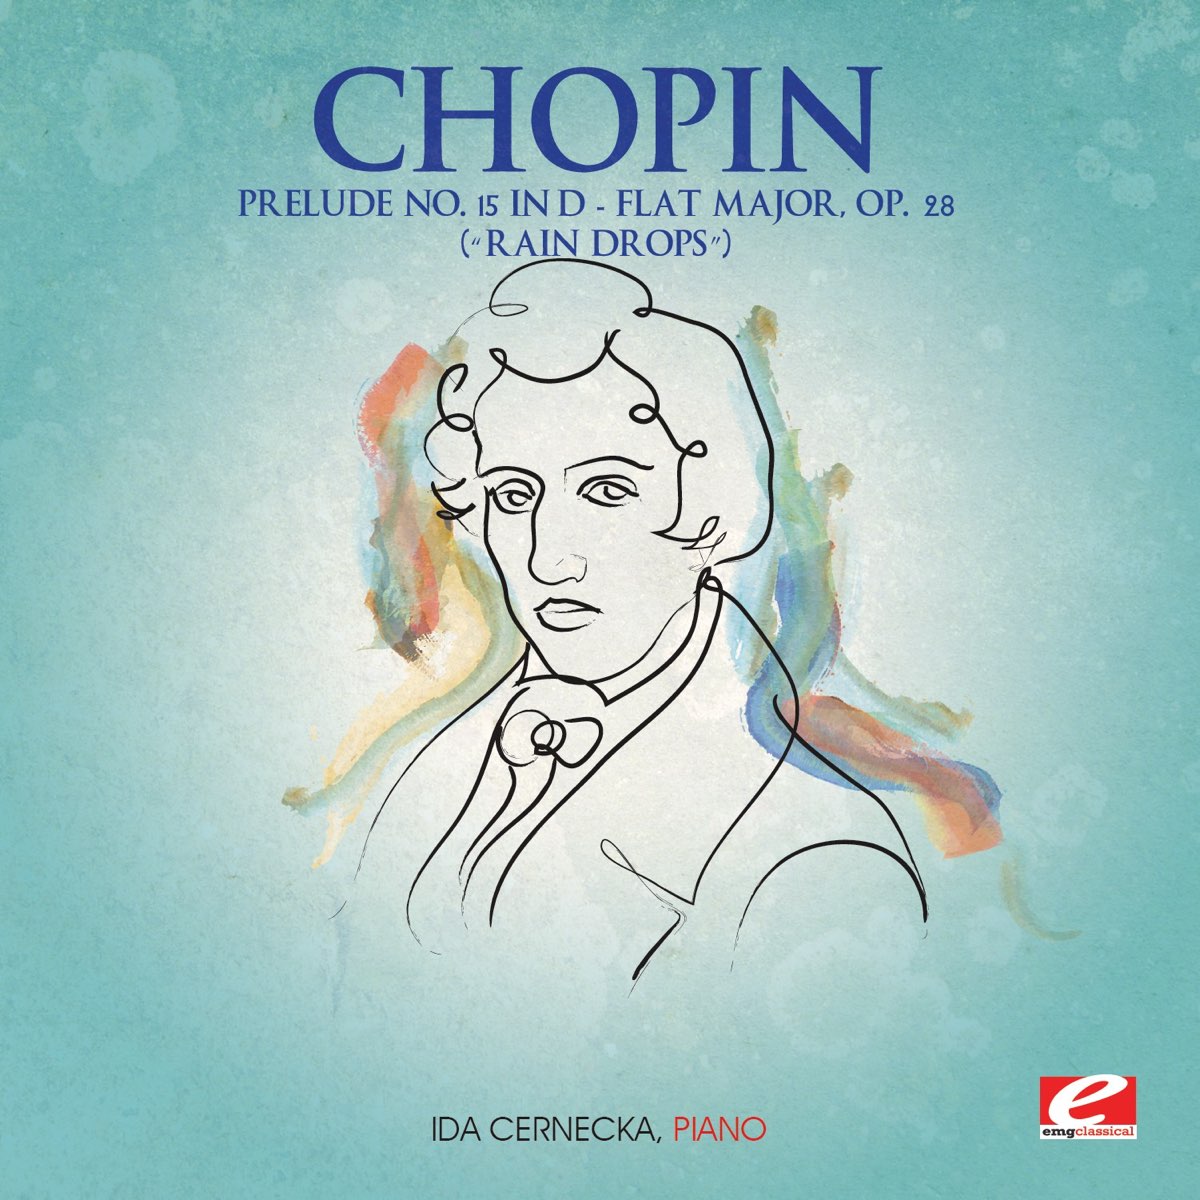 Chopin: Prelude No. 15 in D-Flat Major, Op. 28 “Raindrops” - Single - Album  by Ida Cernecka - Apple Music